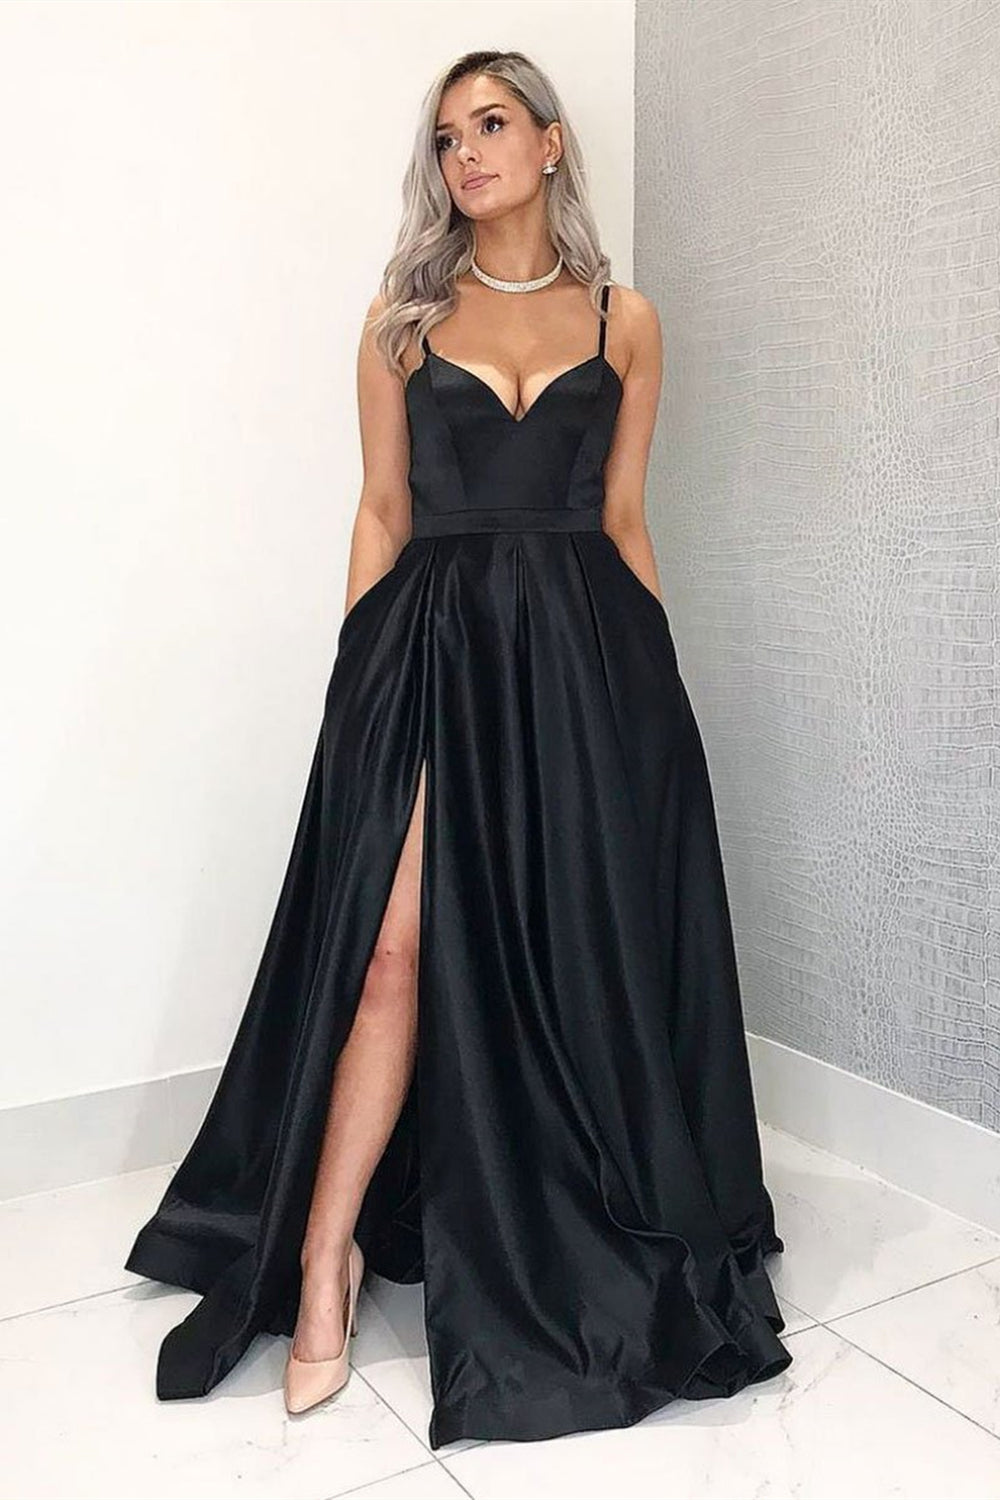 Simple A Line Black Satin Long Prom Dresses with High Slit, Long Black Formal Graduation Evening Dresses EP1469